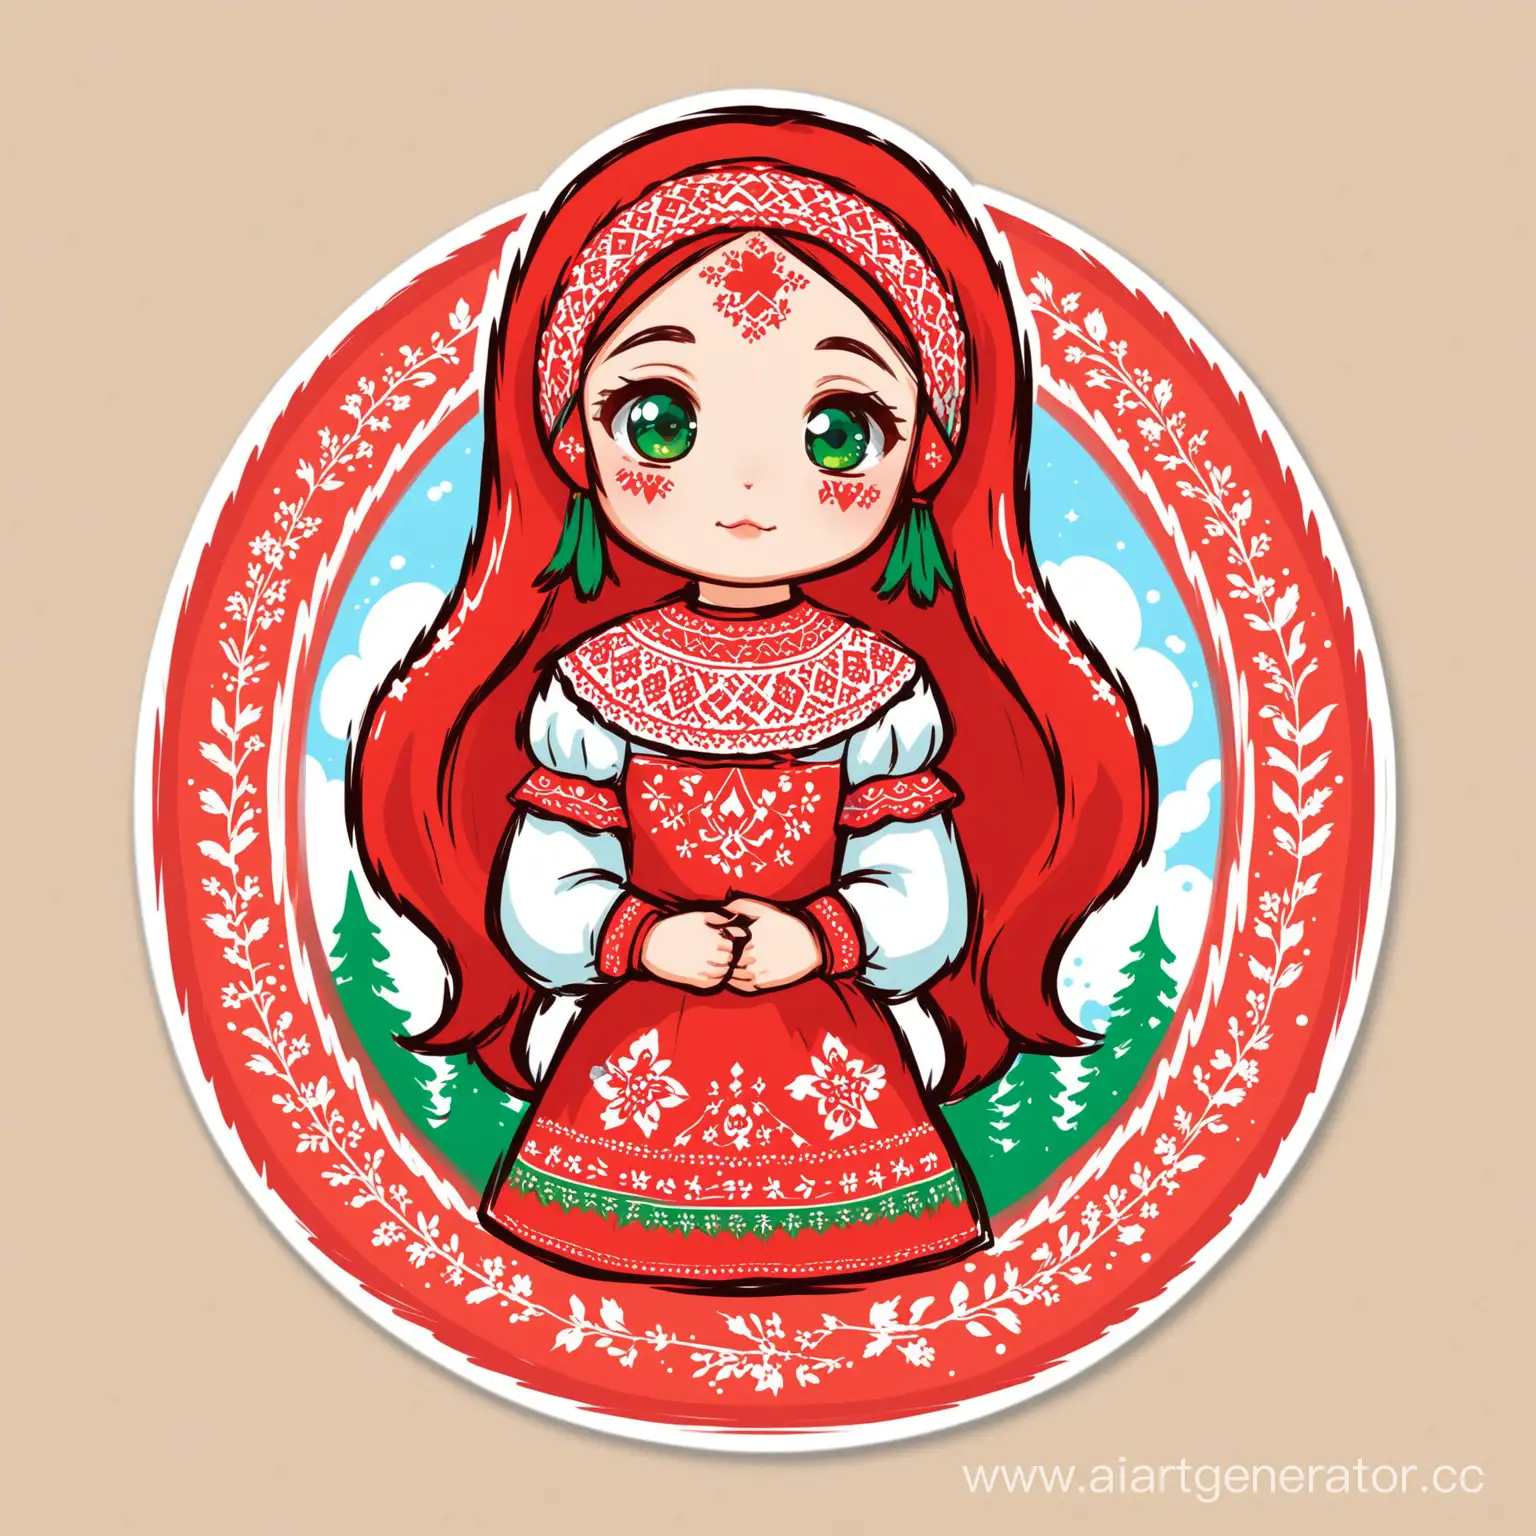 Vibrant-Belarusian-Culture-Sticker-with-Folk-Art-Motifs